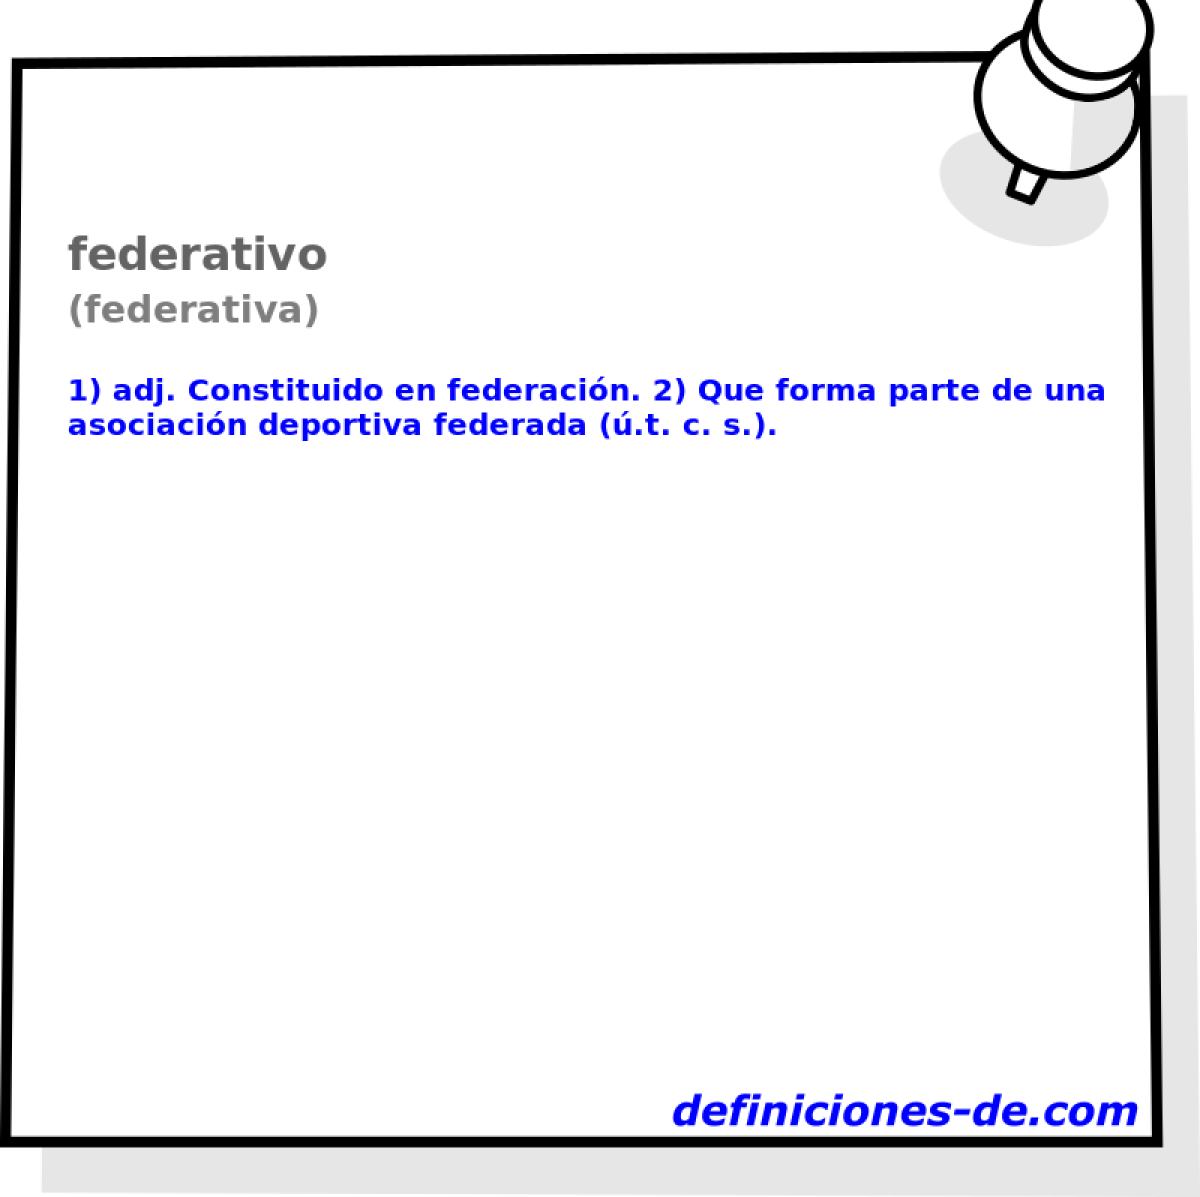 federativo (federativa)